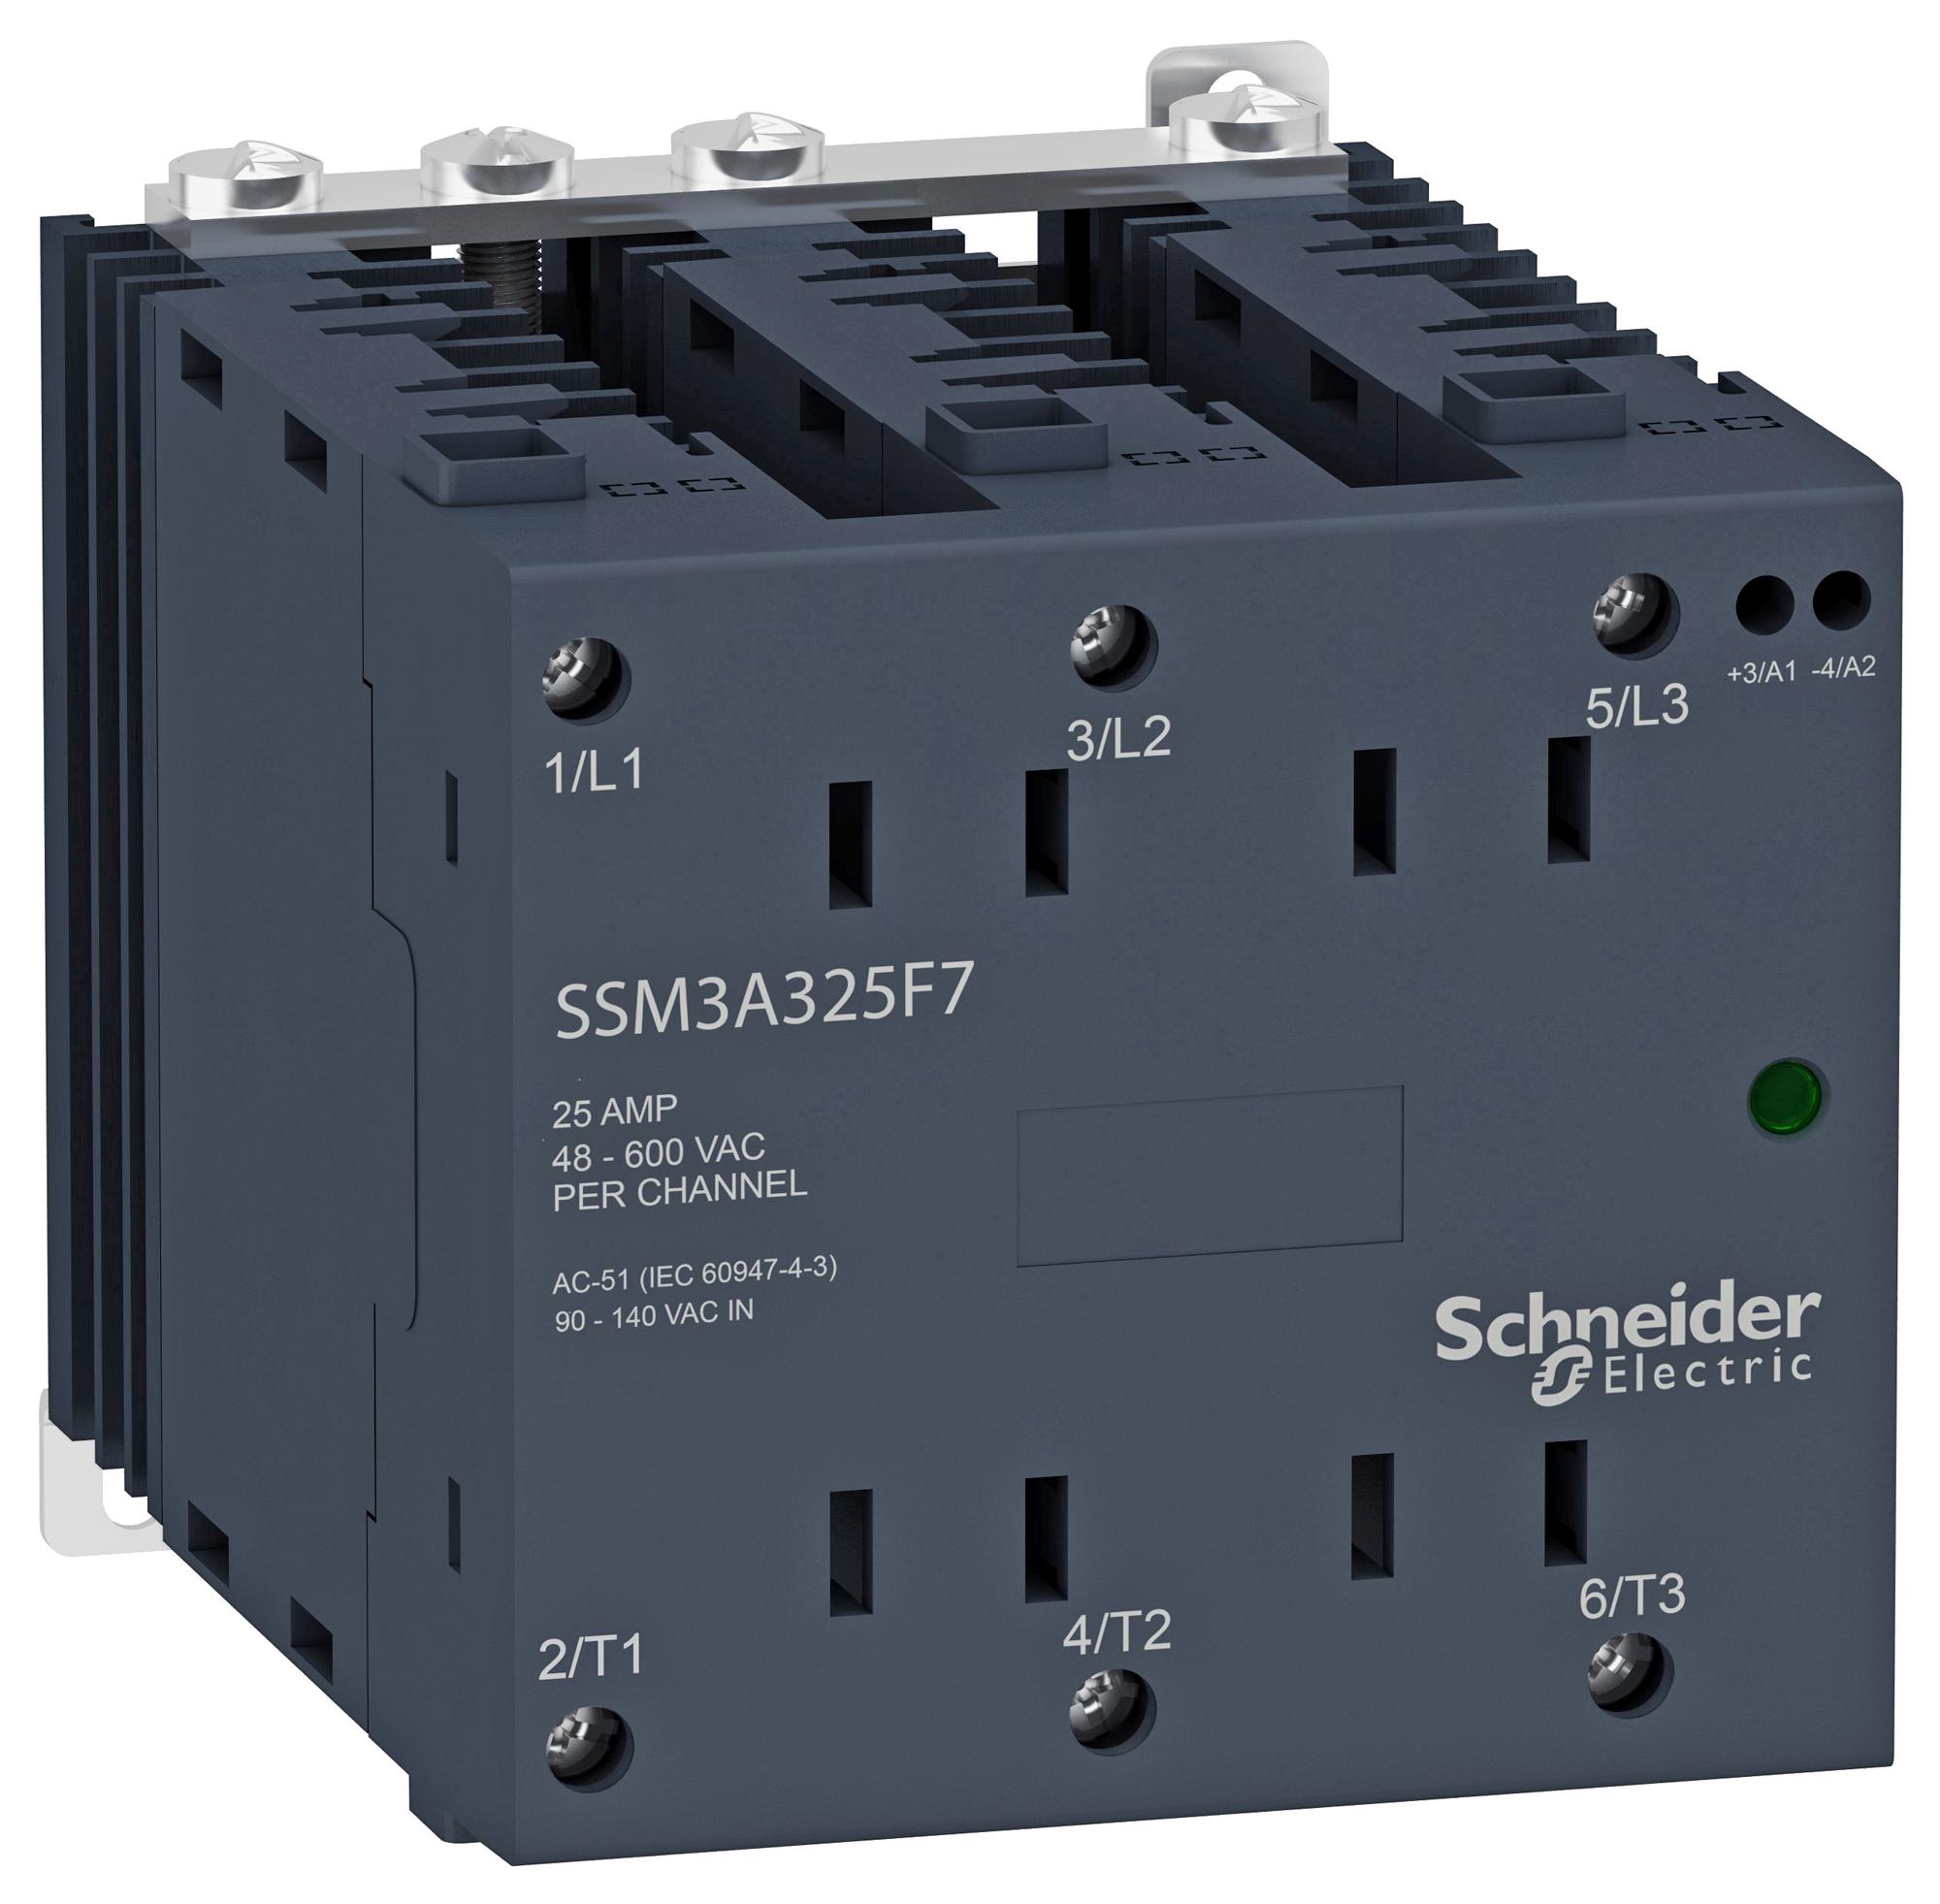 SSM3A325F7 SOLID STATE RELAY, 3PST-NO, 25A, 600VAC SCHNEIDER ELECTRIC